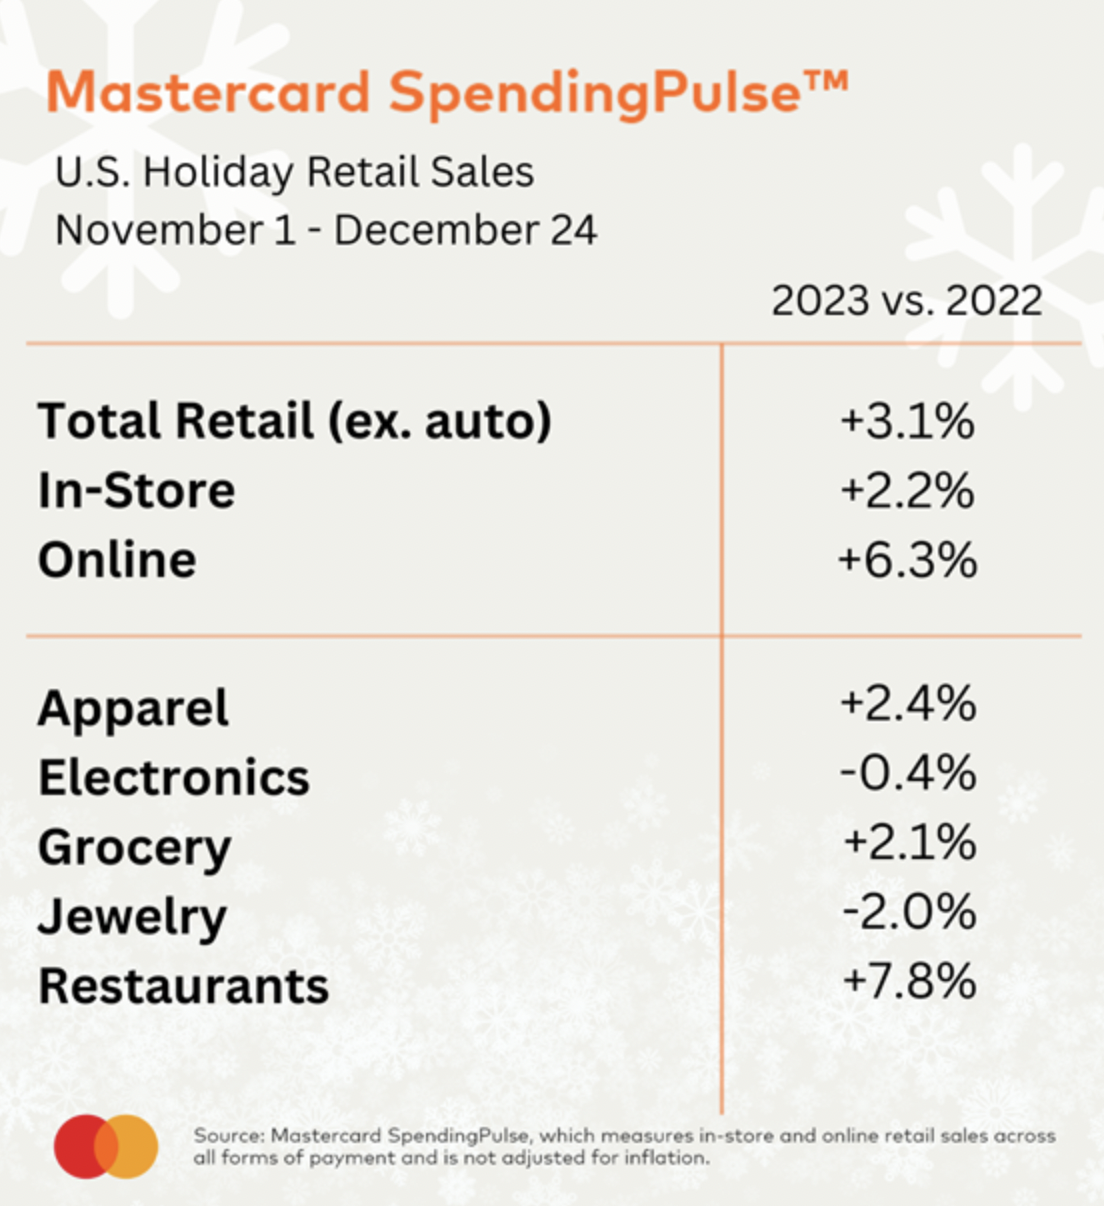 9 Key Takeaways from the Mastercard SpendingPulse 2023 Report - E